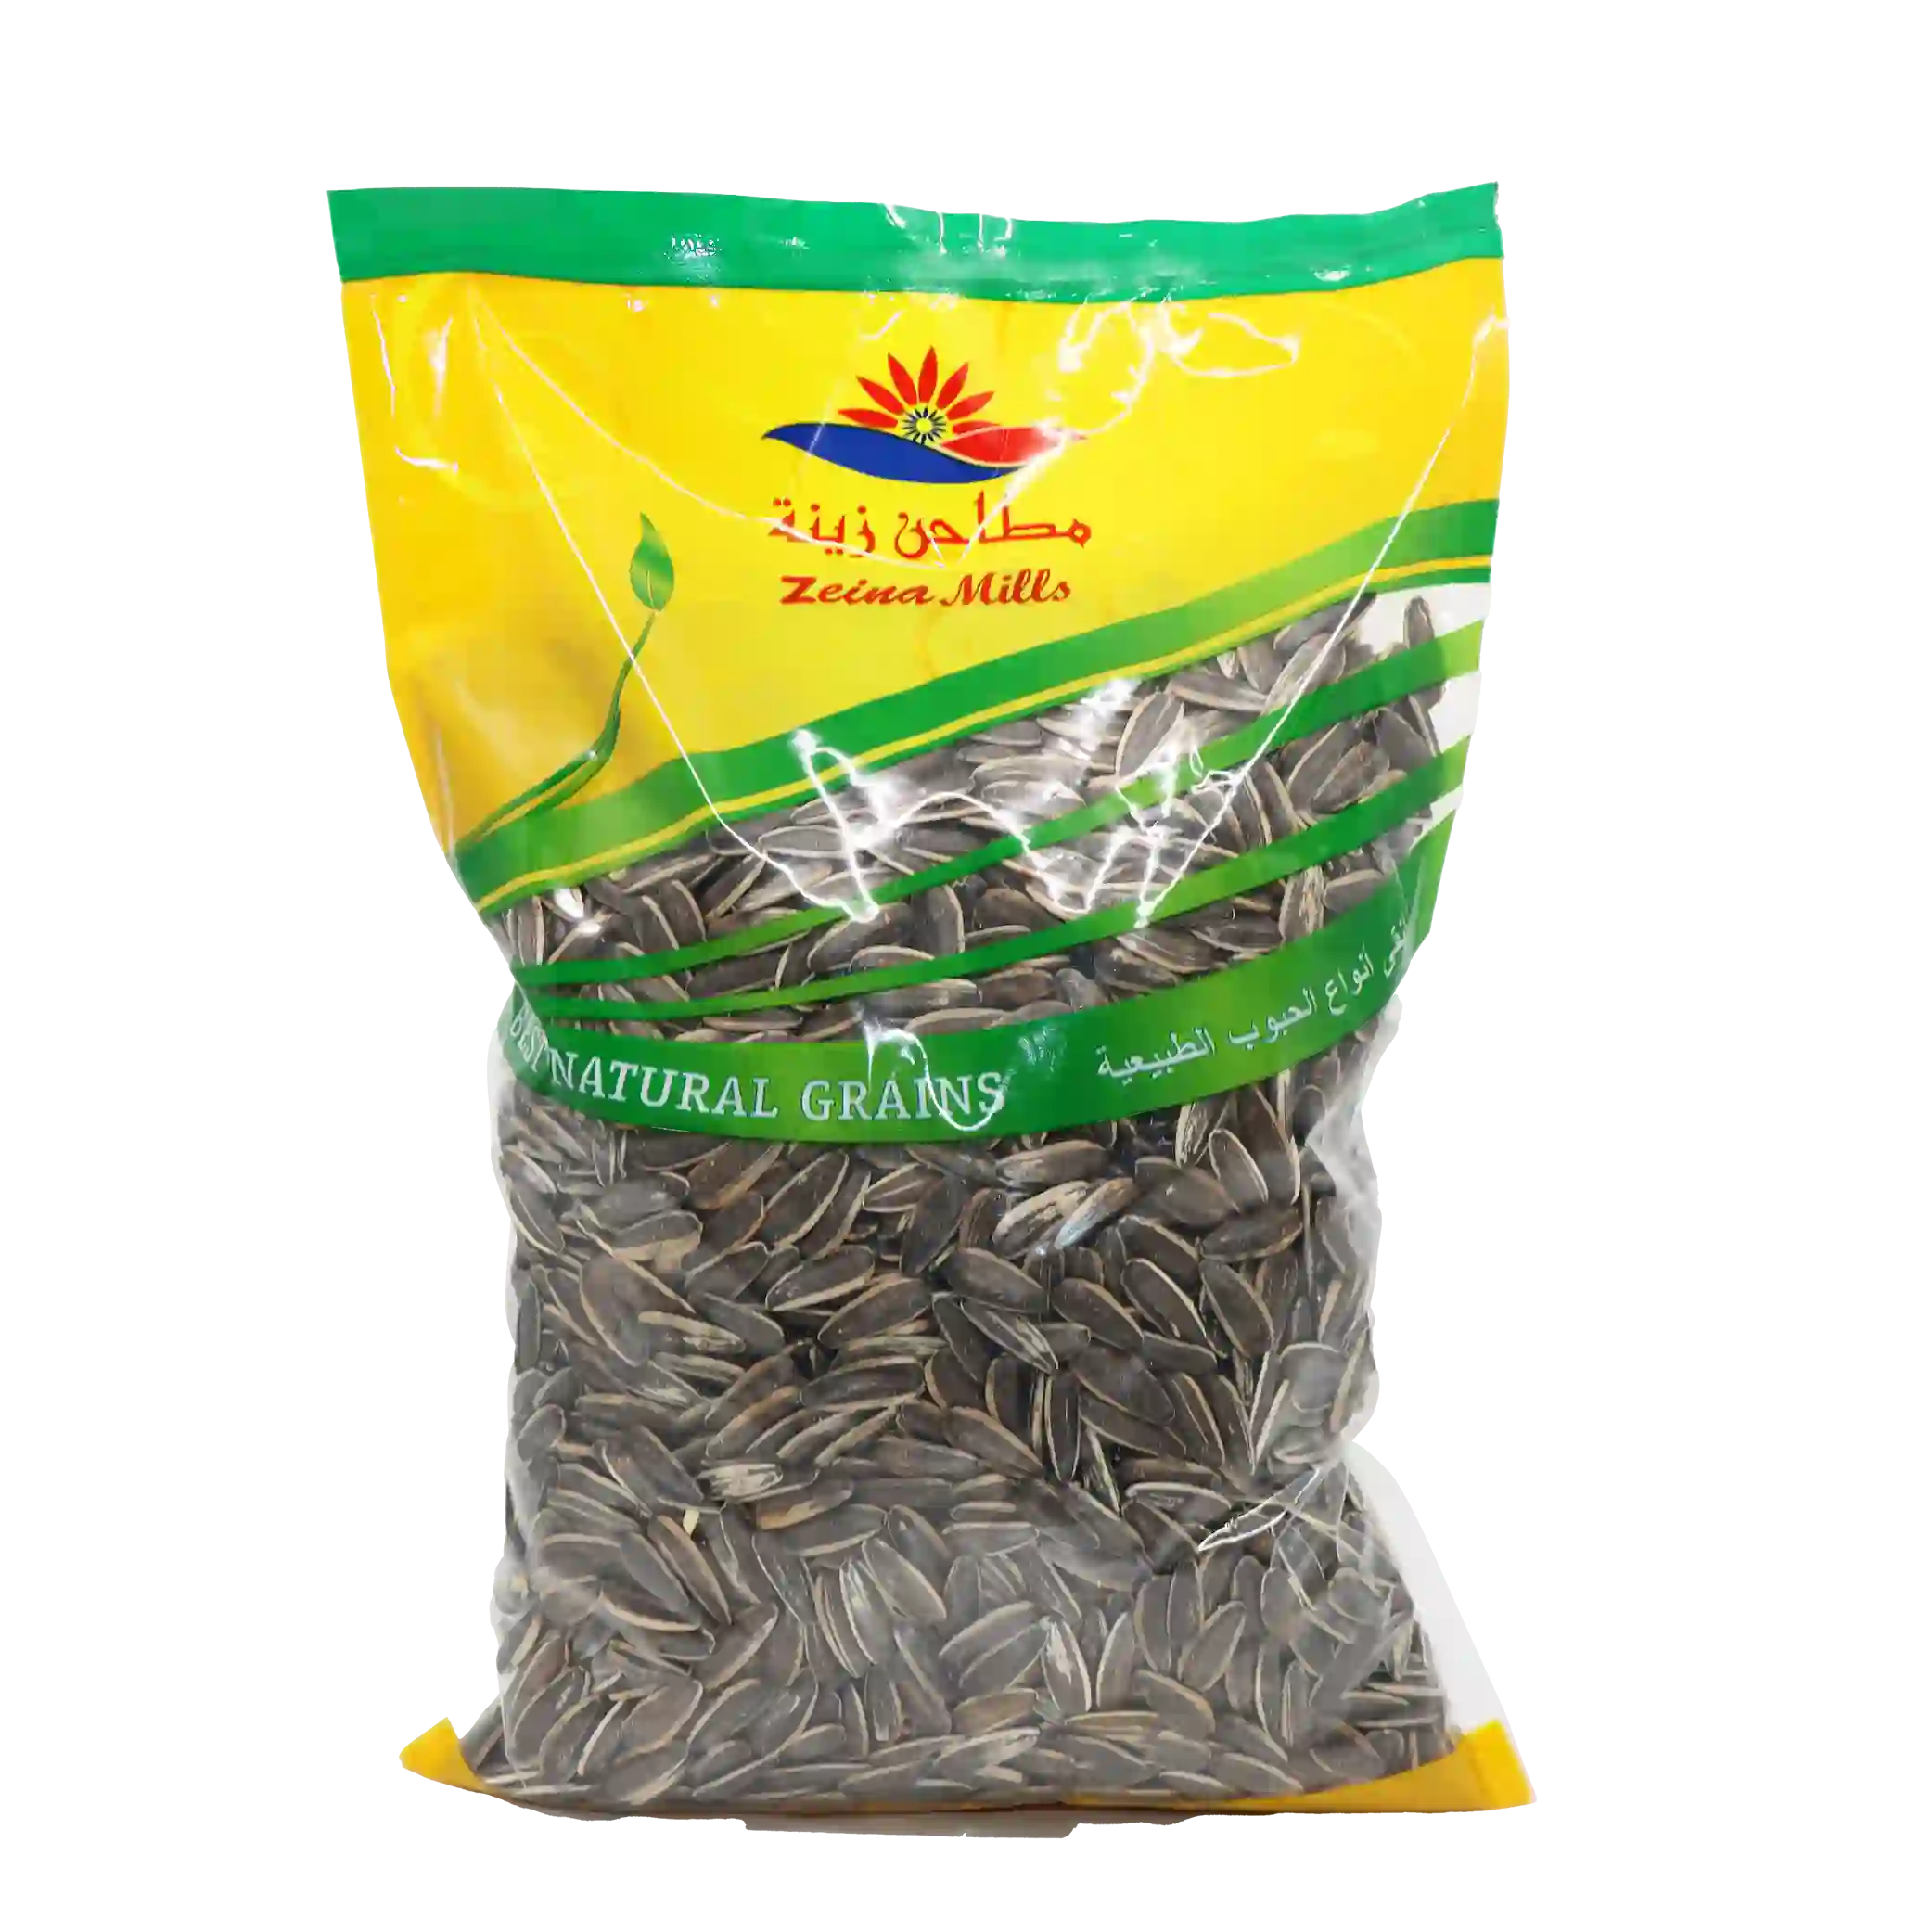 KAC - Raw sunflower seeds - 1 kilo